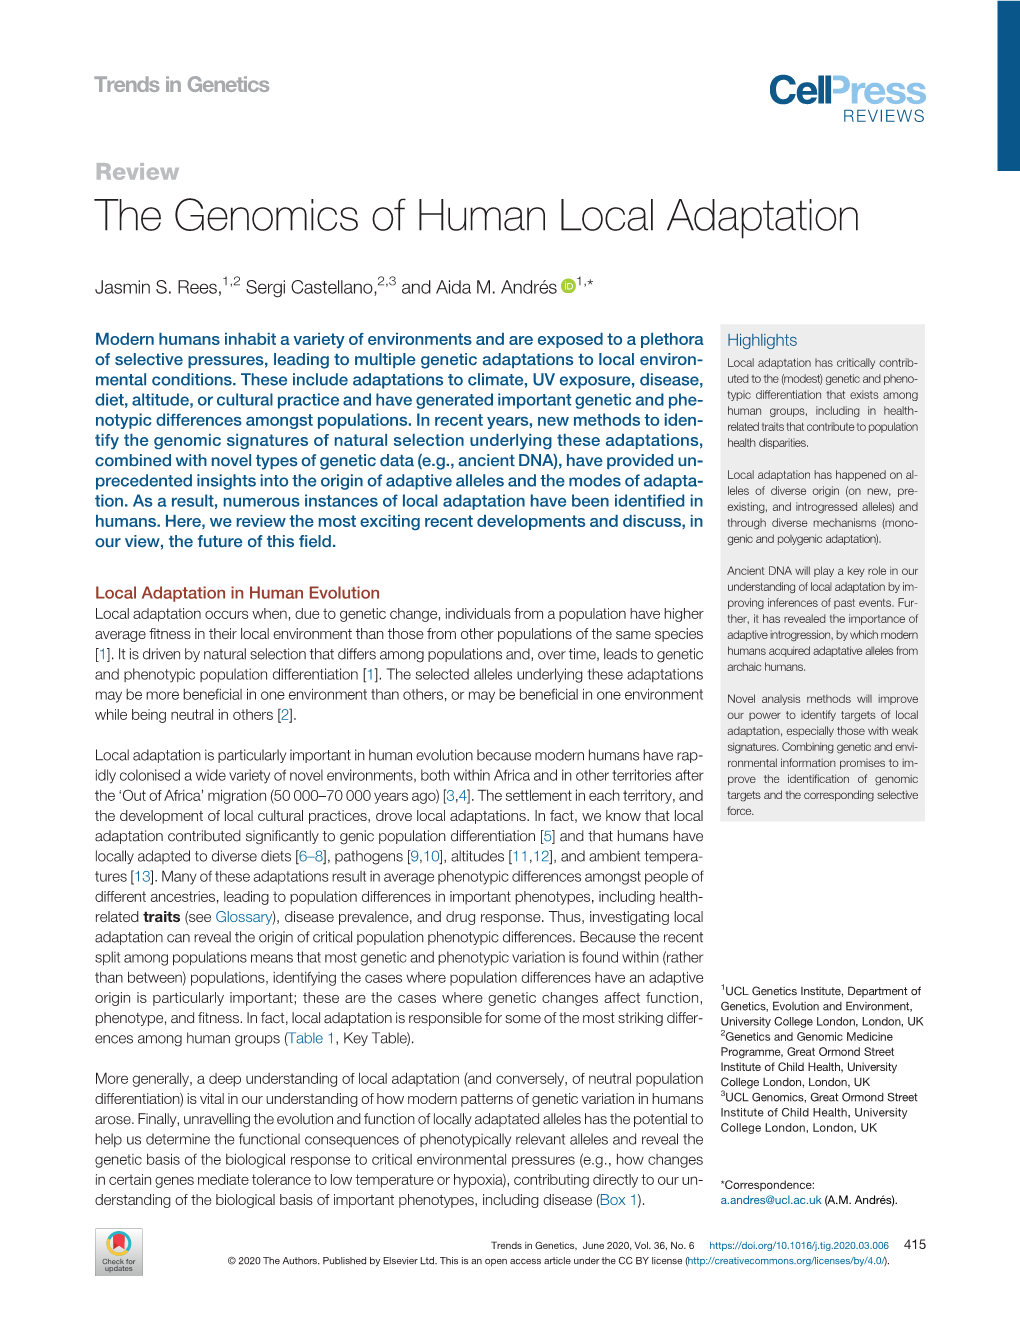 The Genomics of Human Local Adaptation